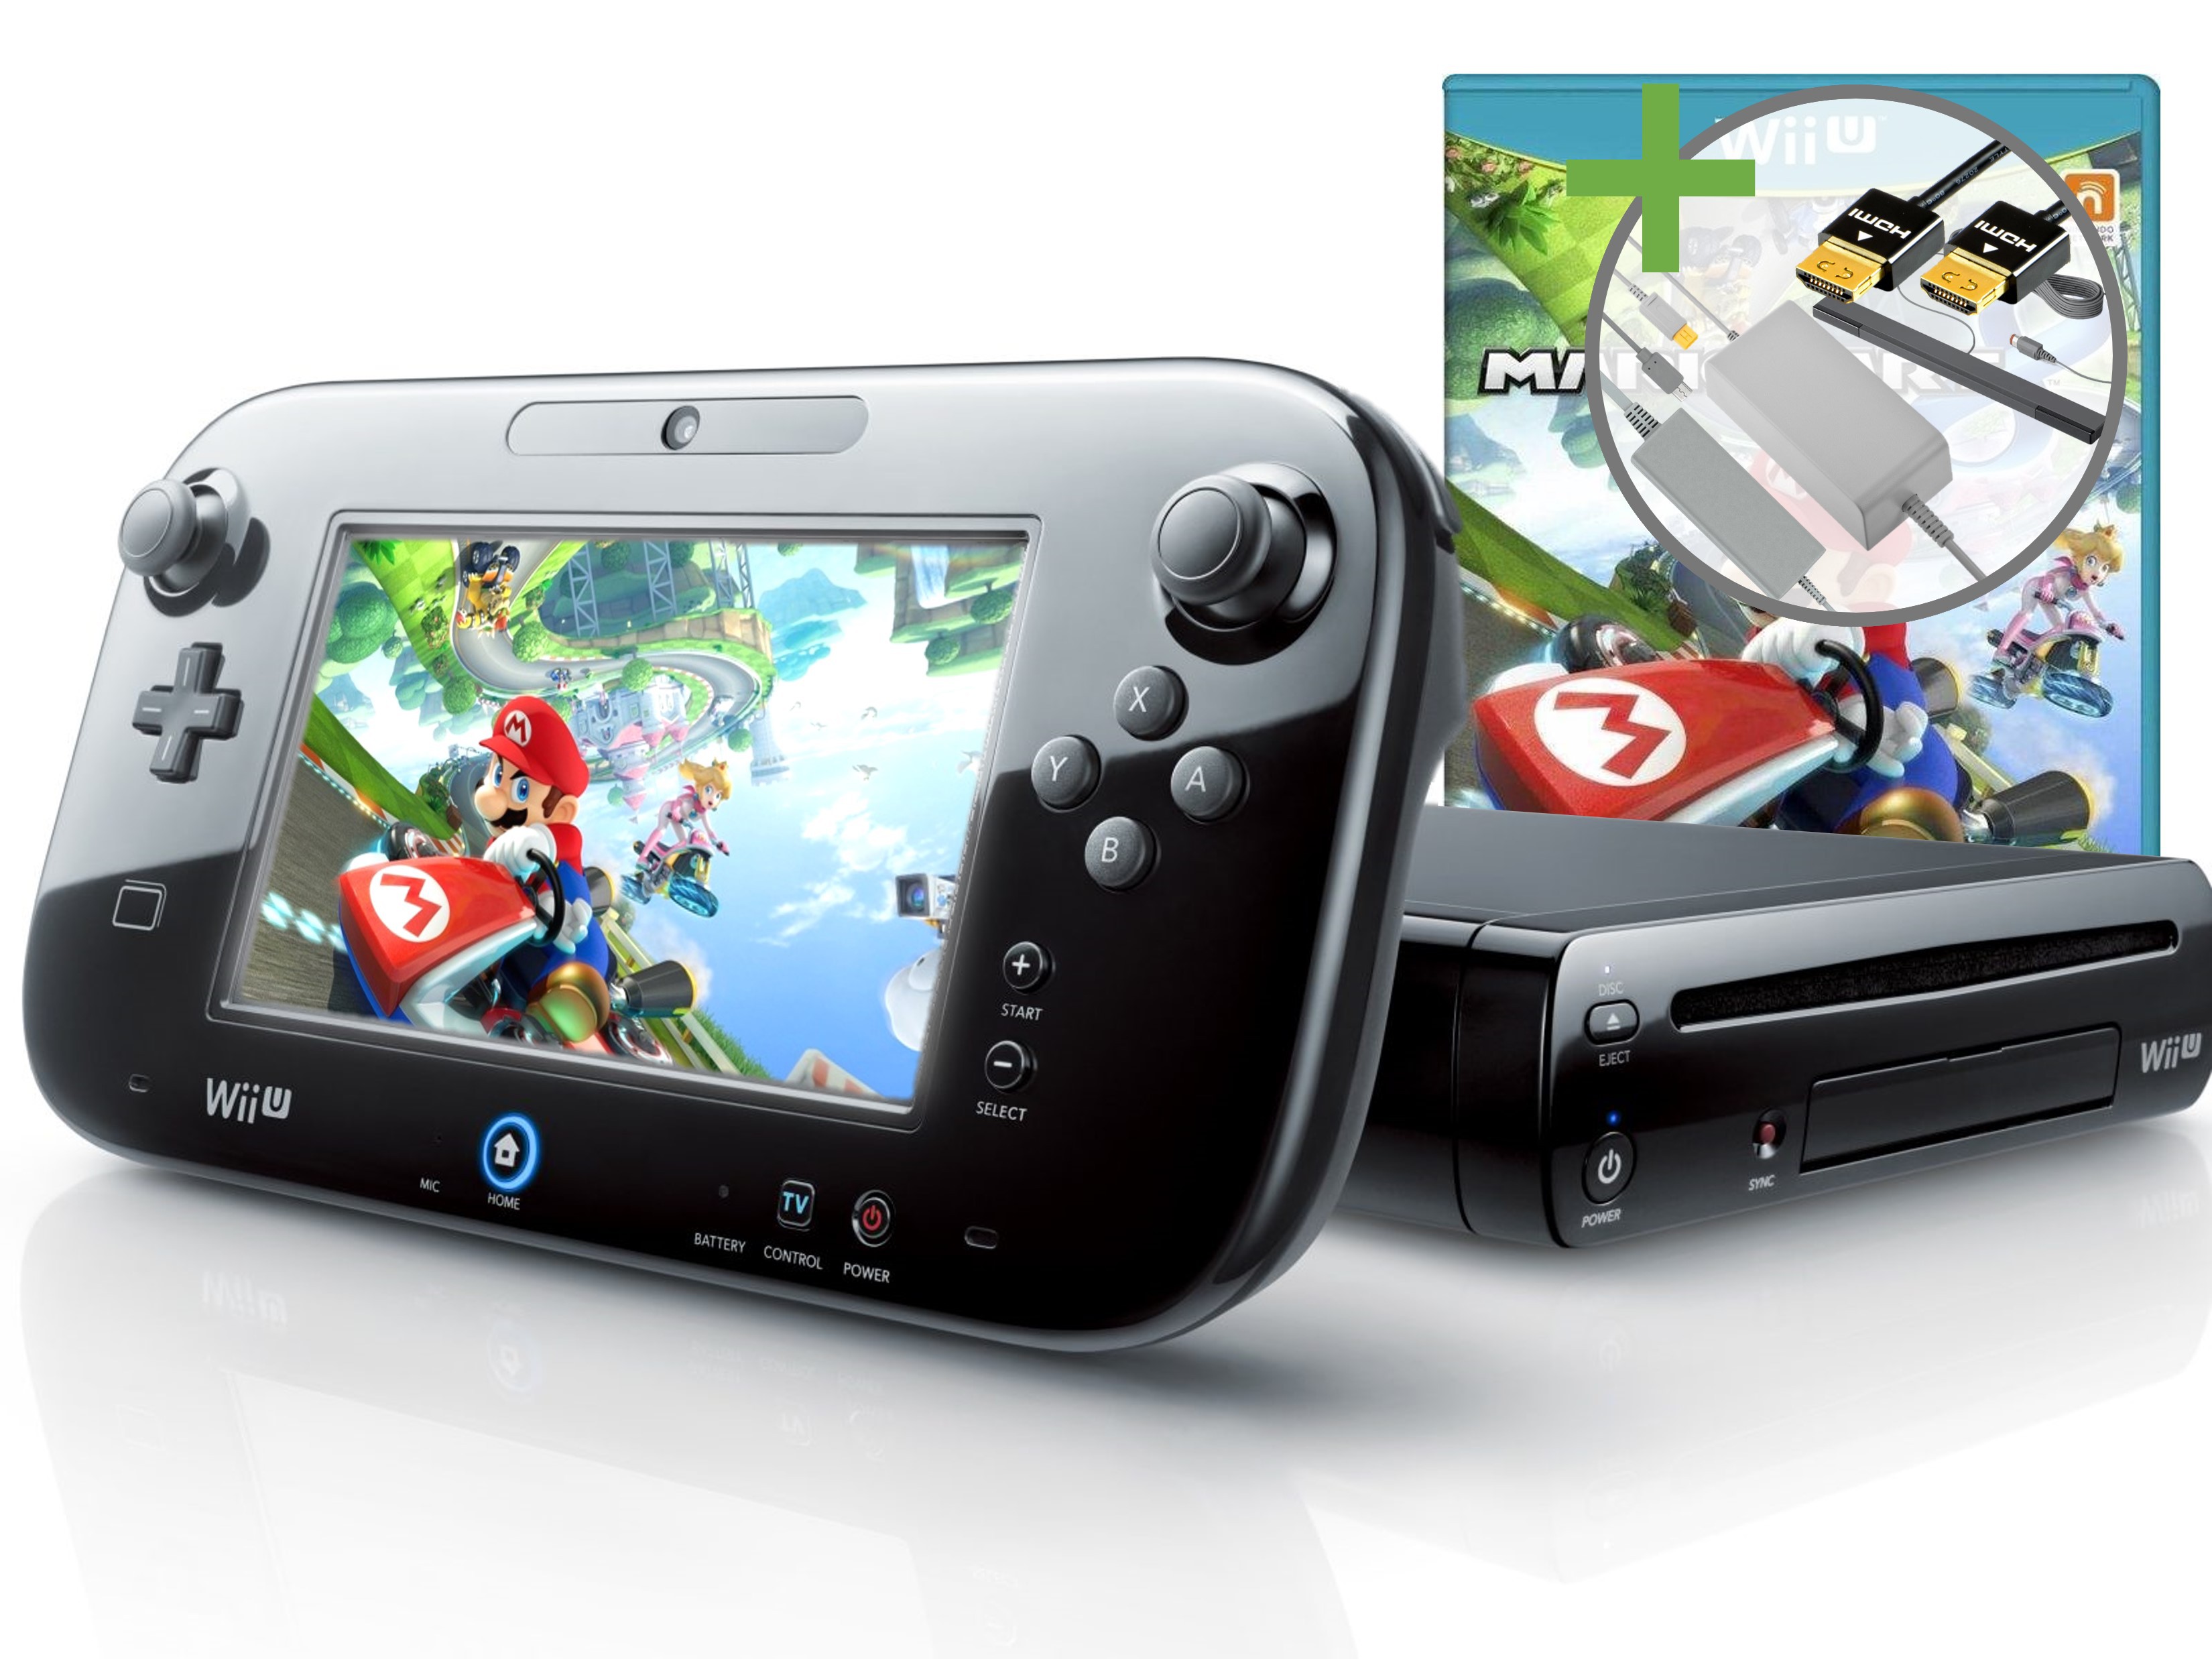 Nintendo Wii U Starter Pack - Mario Kart 8 Edition [Complete] - Wii U Hardware - 2